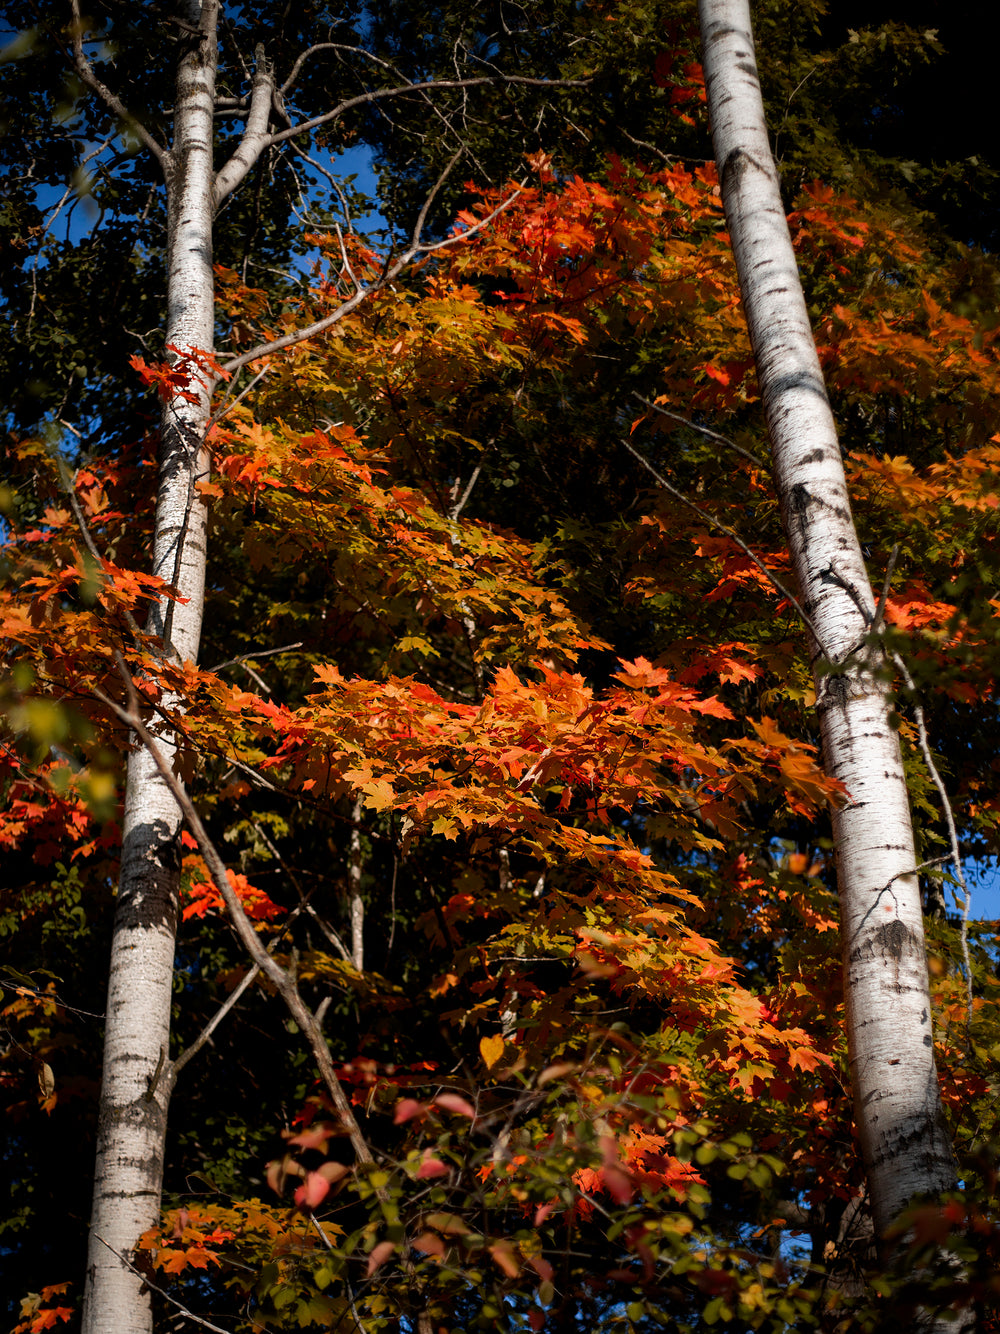 autumn leaves zig zag between trees like a trestle